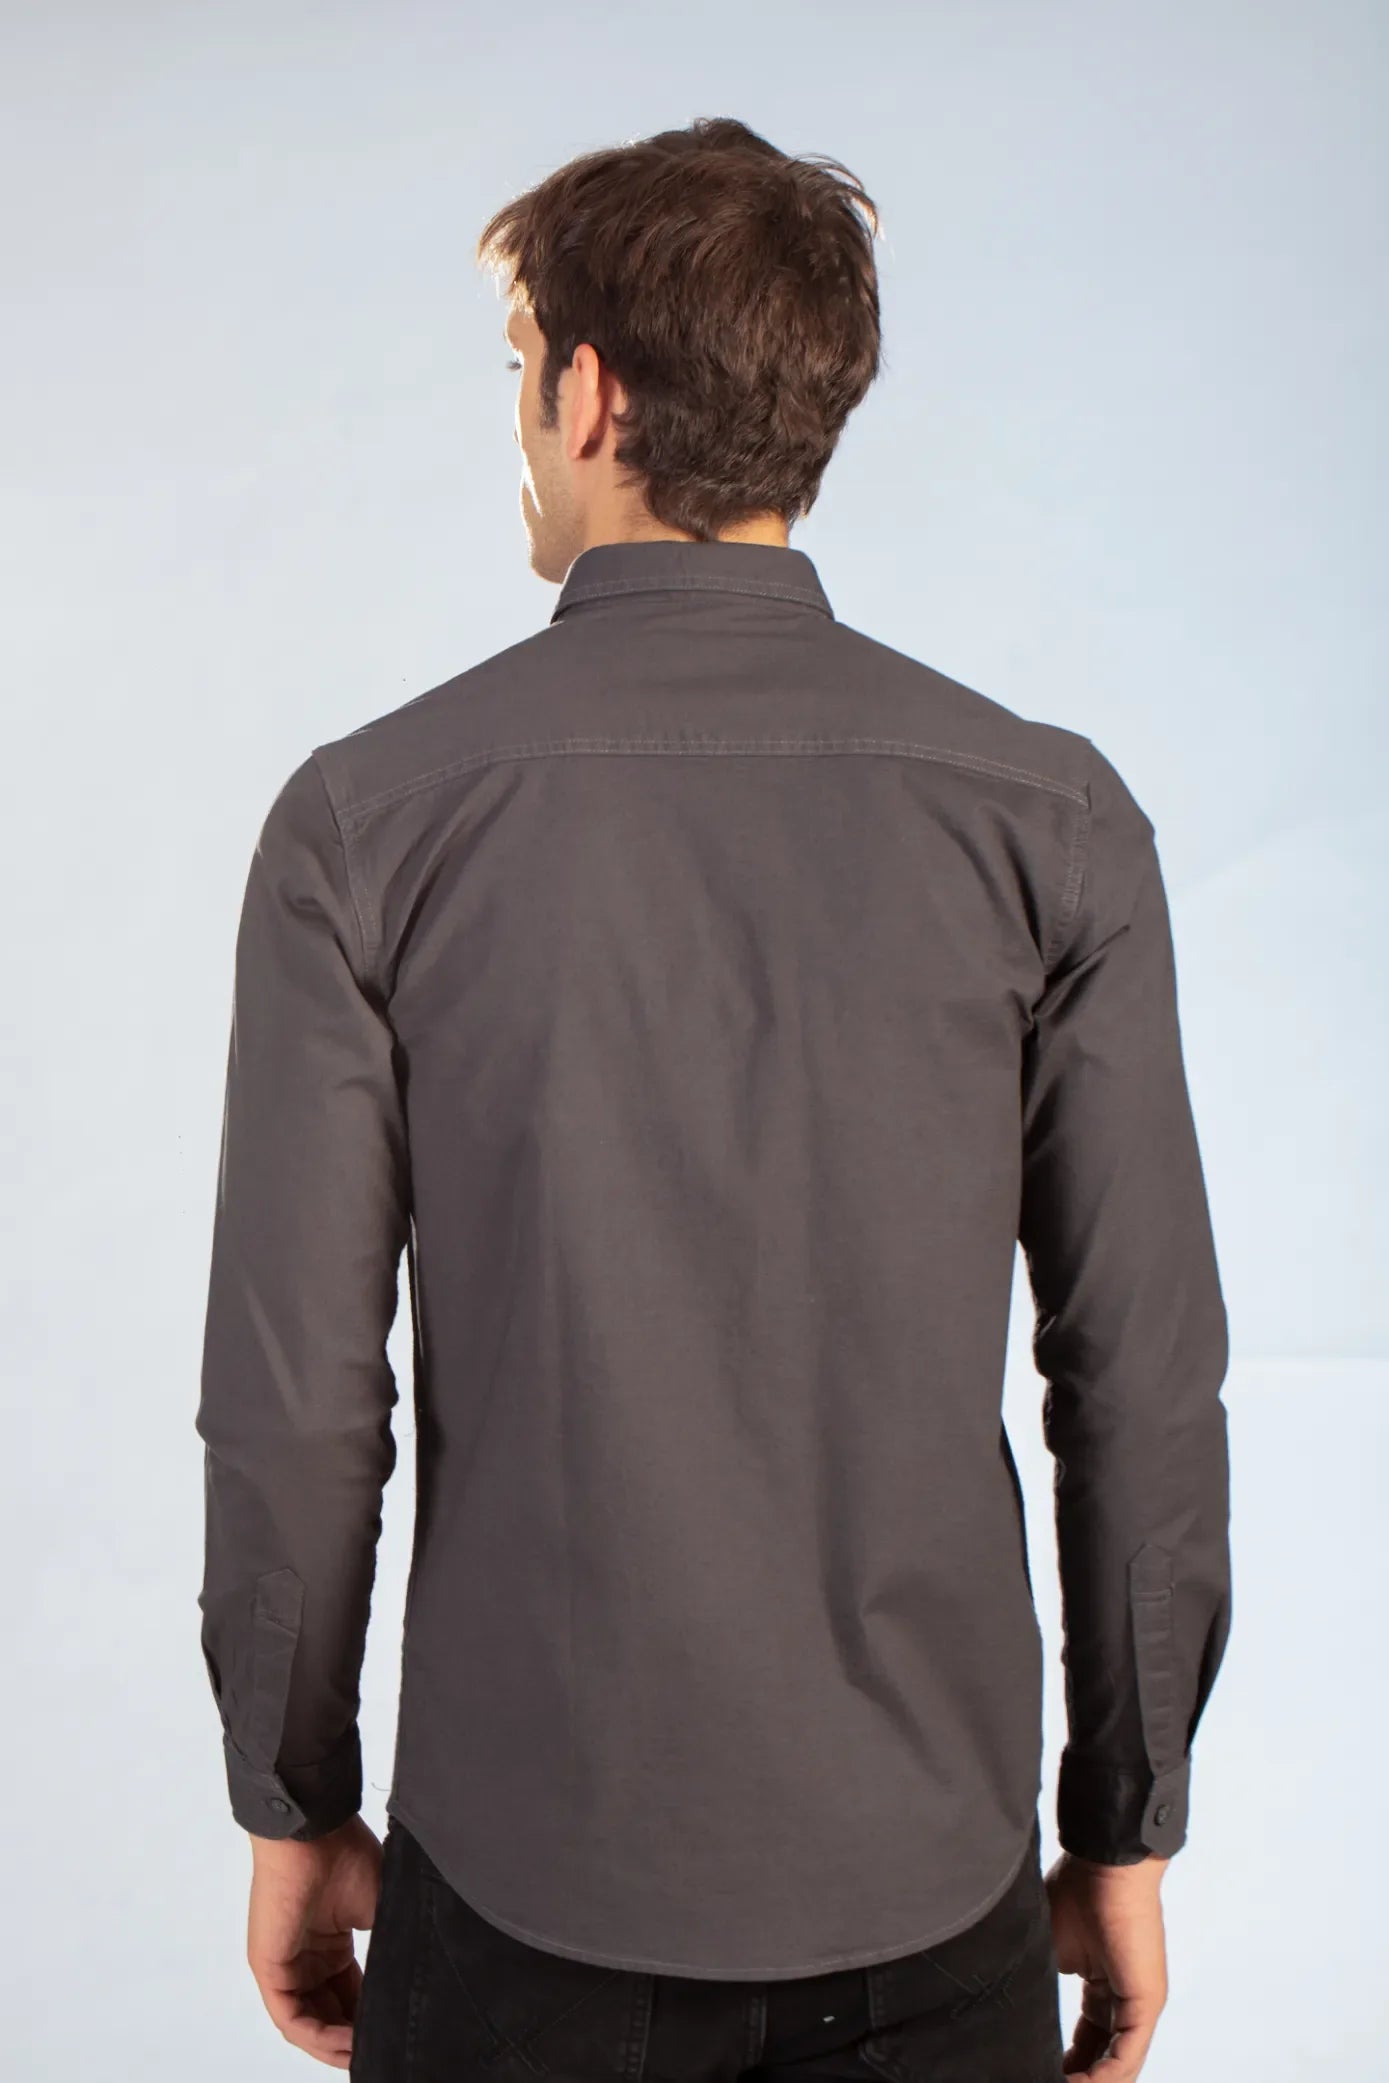 Buy Double Pocket Oxford-Lycra Shirt Online.